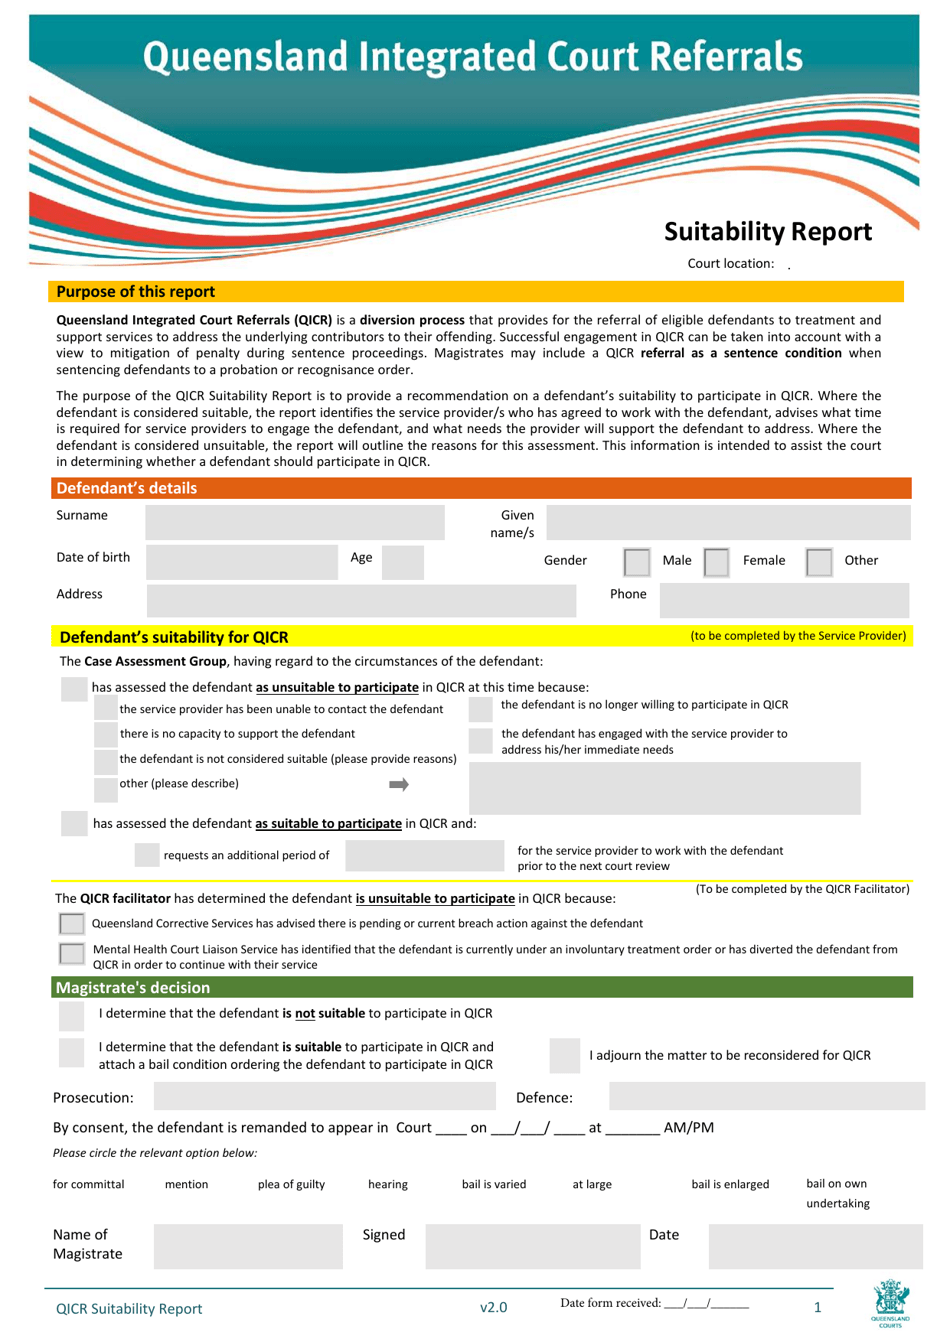 Qicr Suitability Report - Queensland, Australia, Page 1